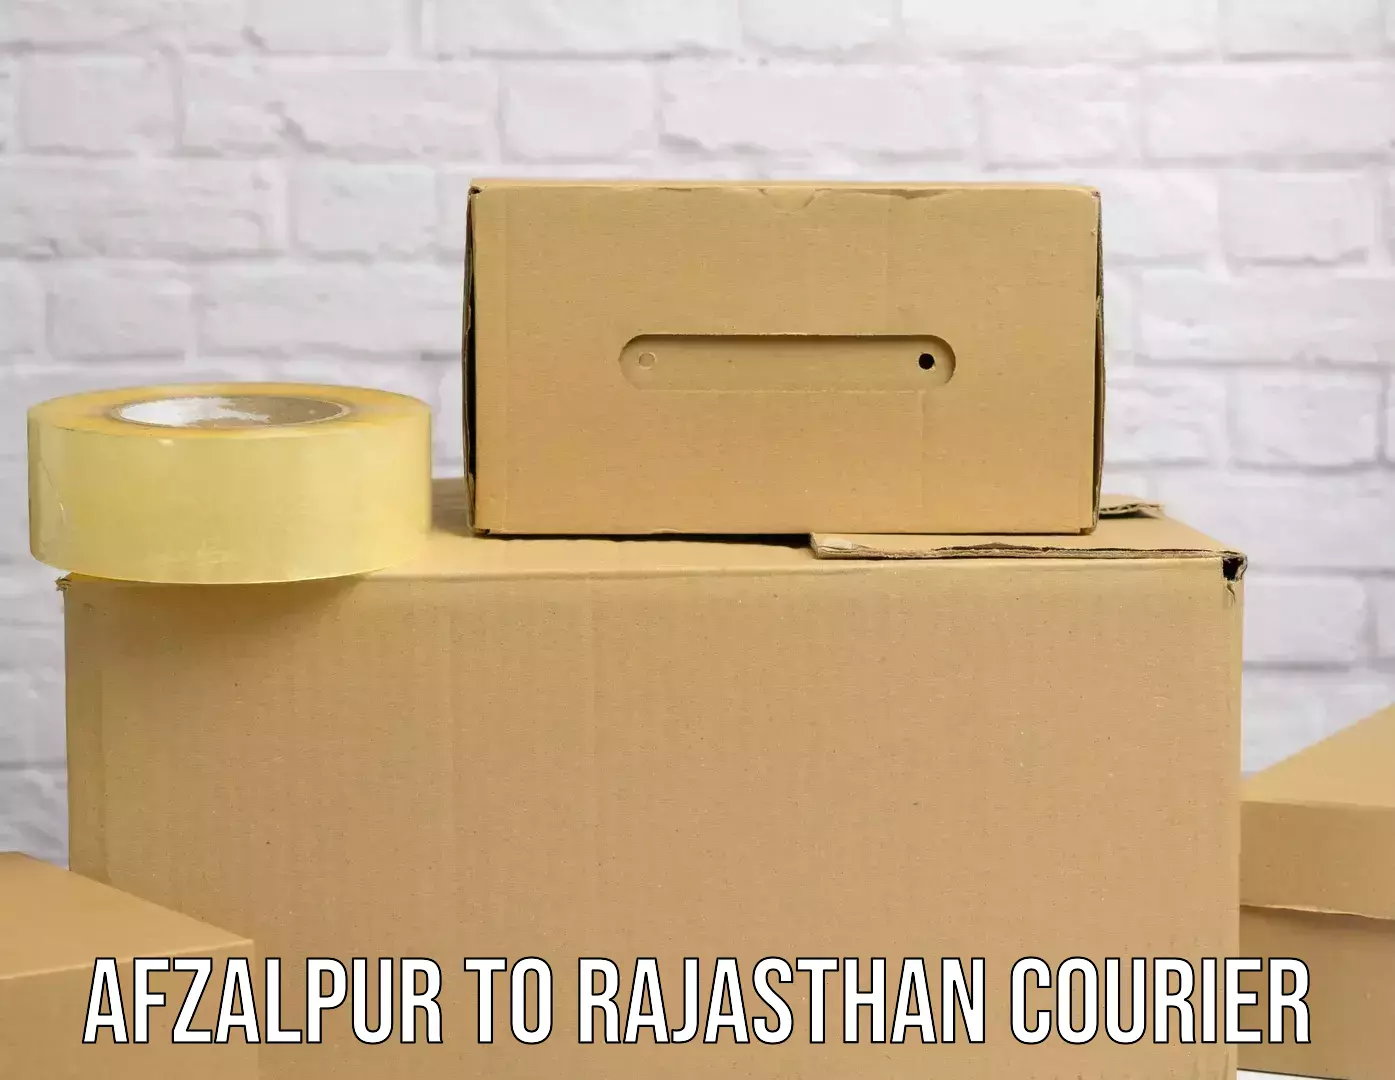 Cargo delivery service Afzalpur to Jhunjhunu